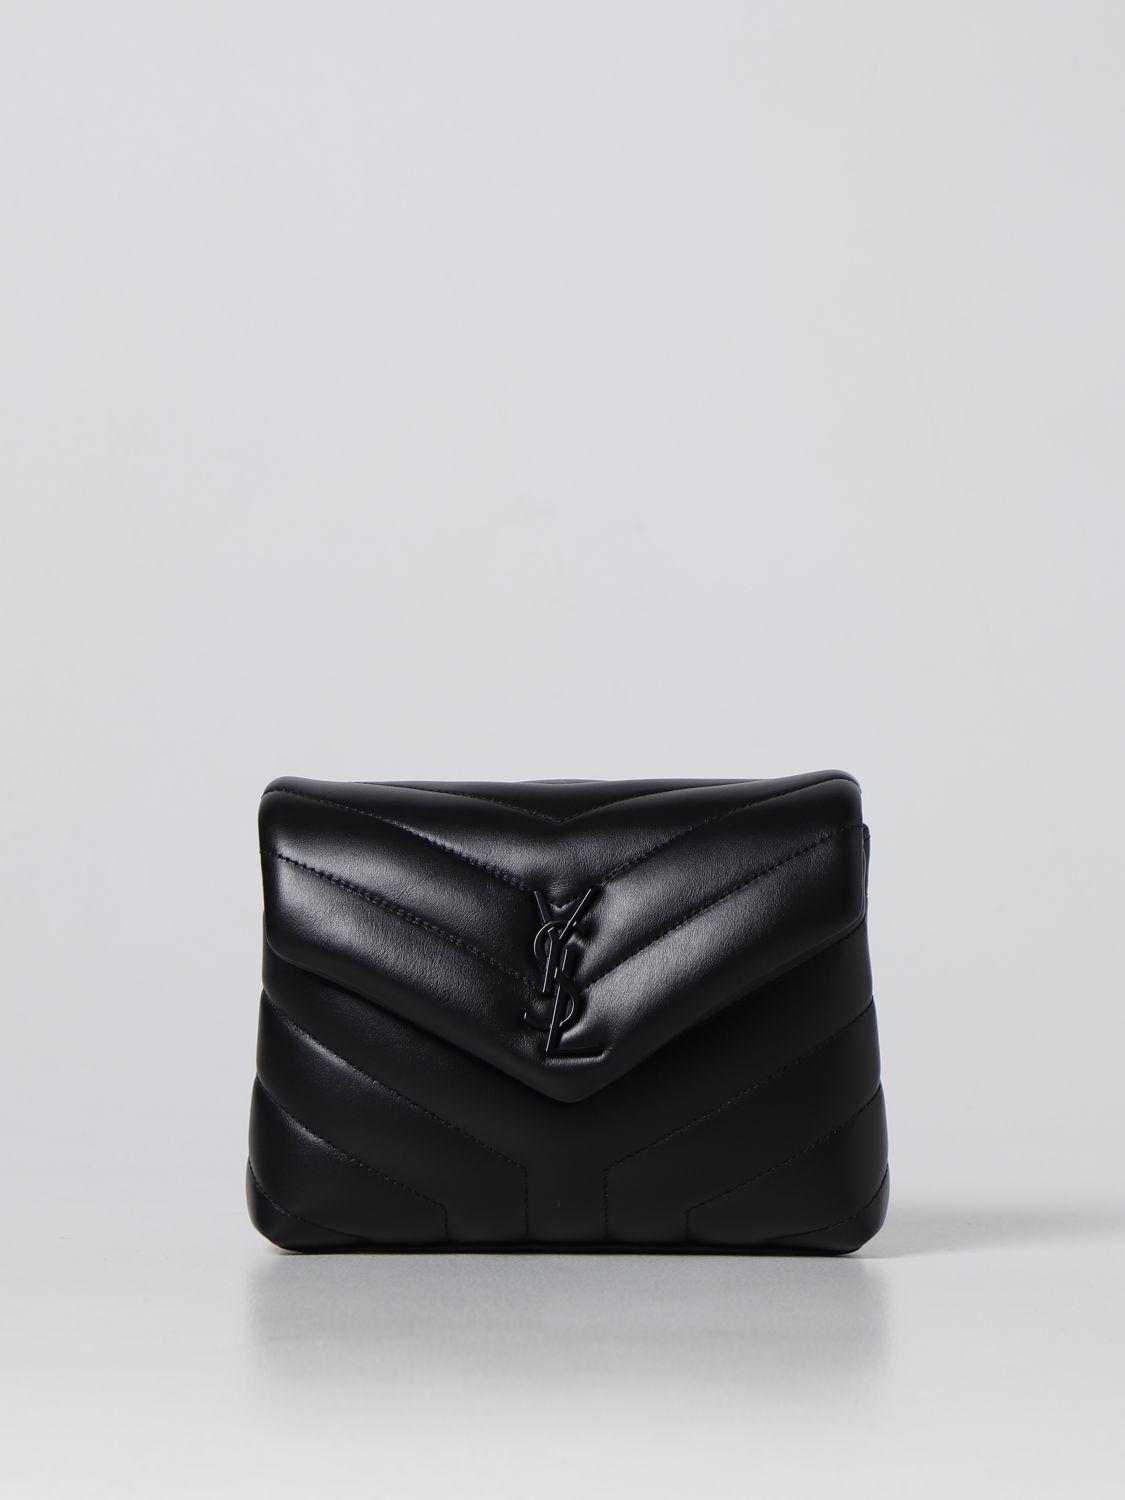 Saint Laurent Woman's Mini Bag